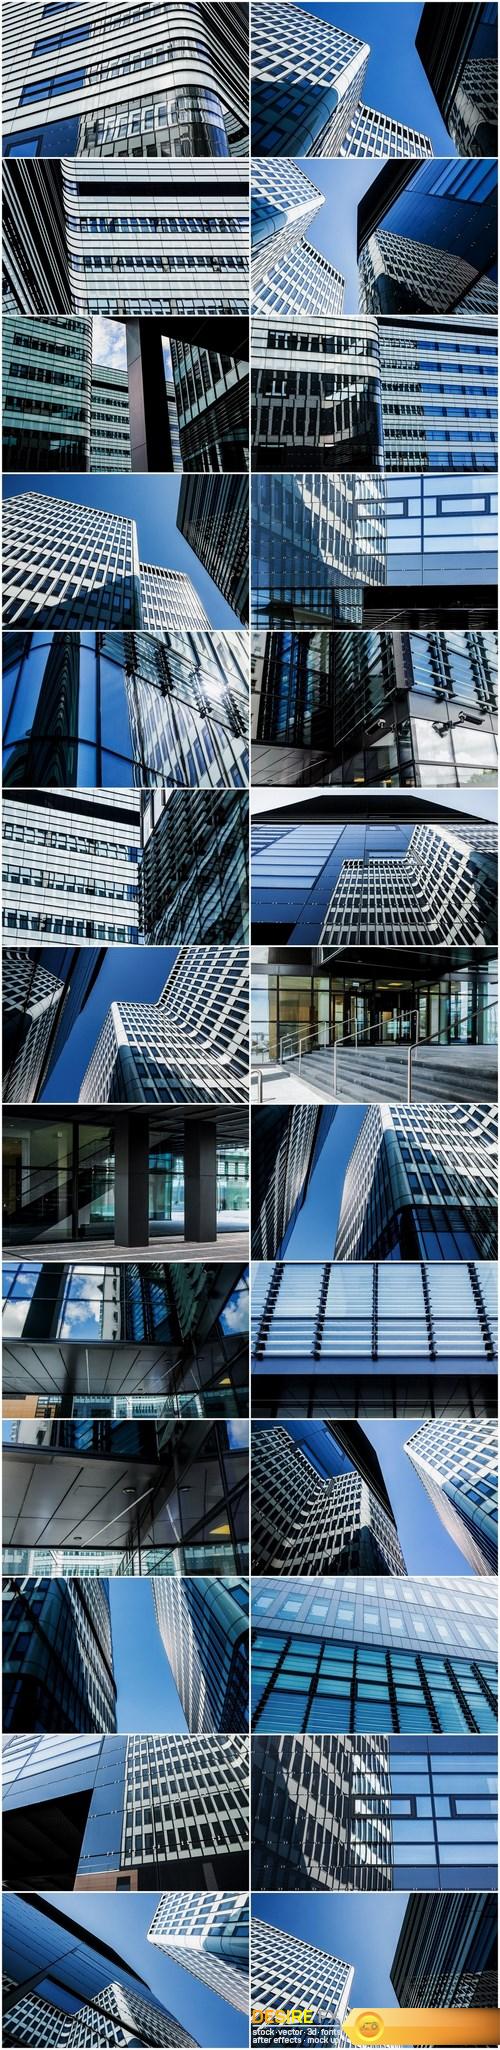 Modern Architecture, Skyscrapers, Metal & Glass - 125 HQ JPEG Photo4